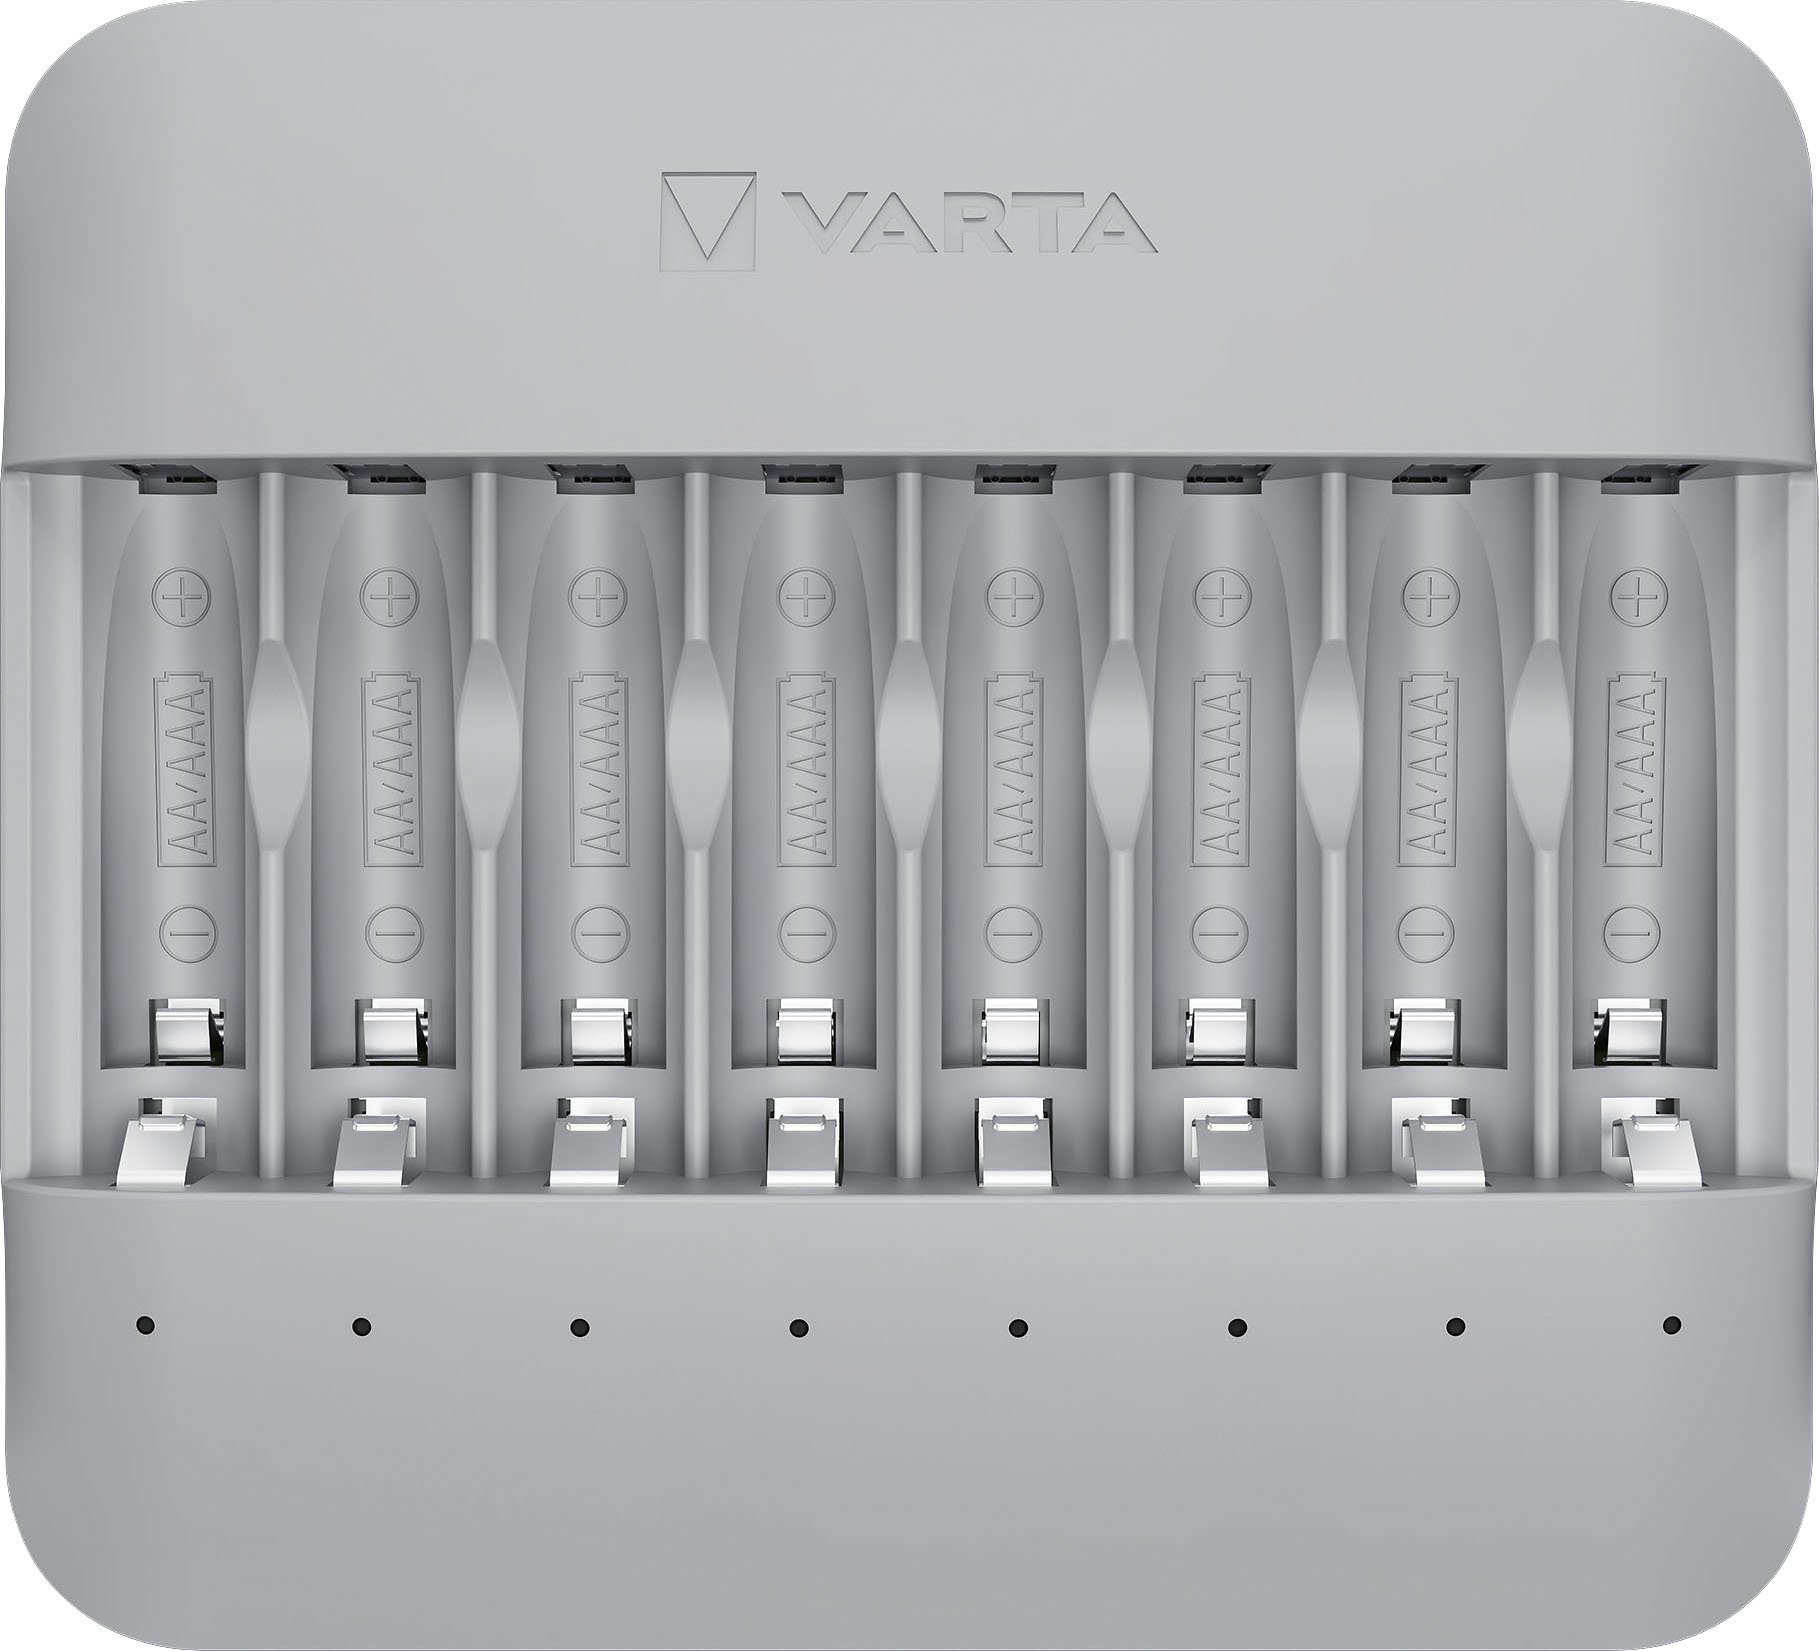 VARTA Eco Charger Multi Recycled Batterie-Ladegerät (2000 mA)